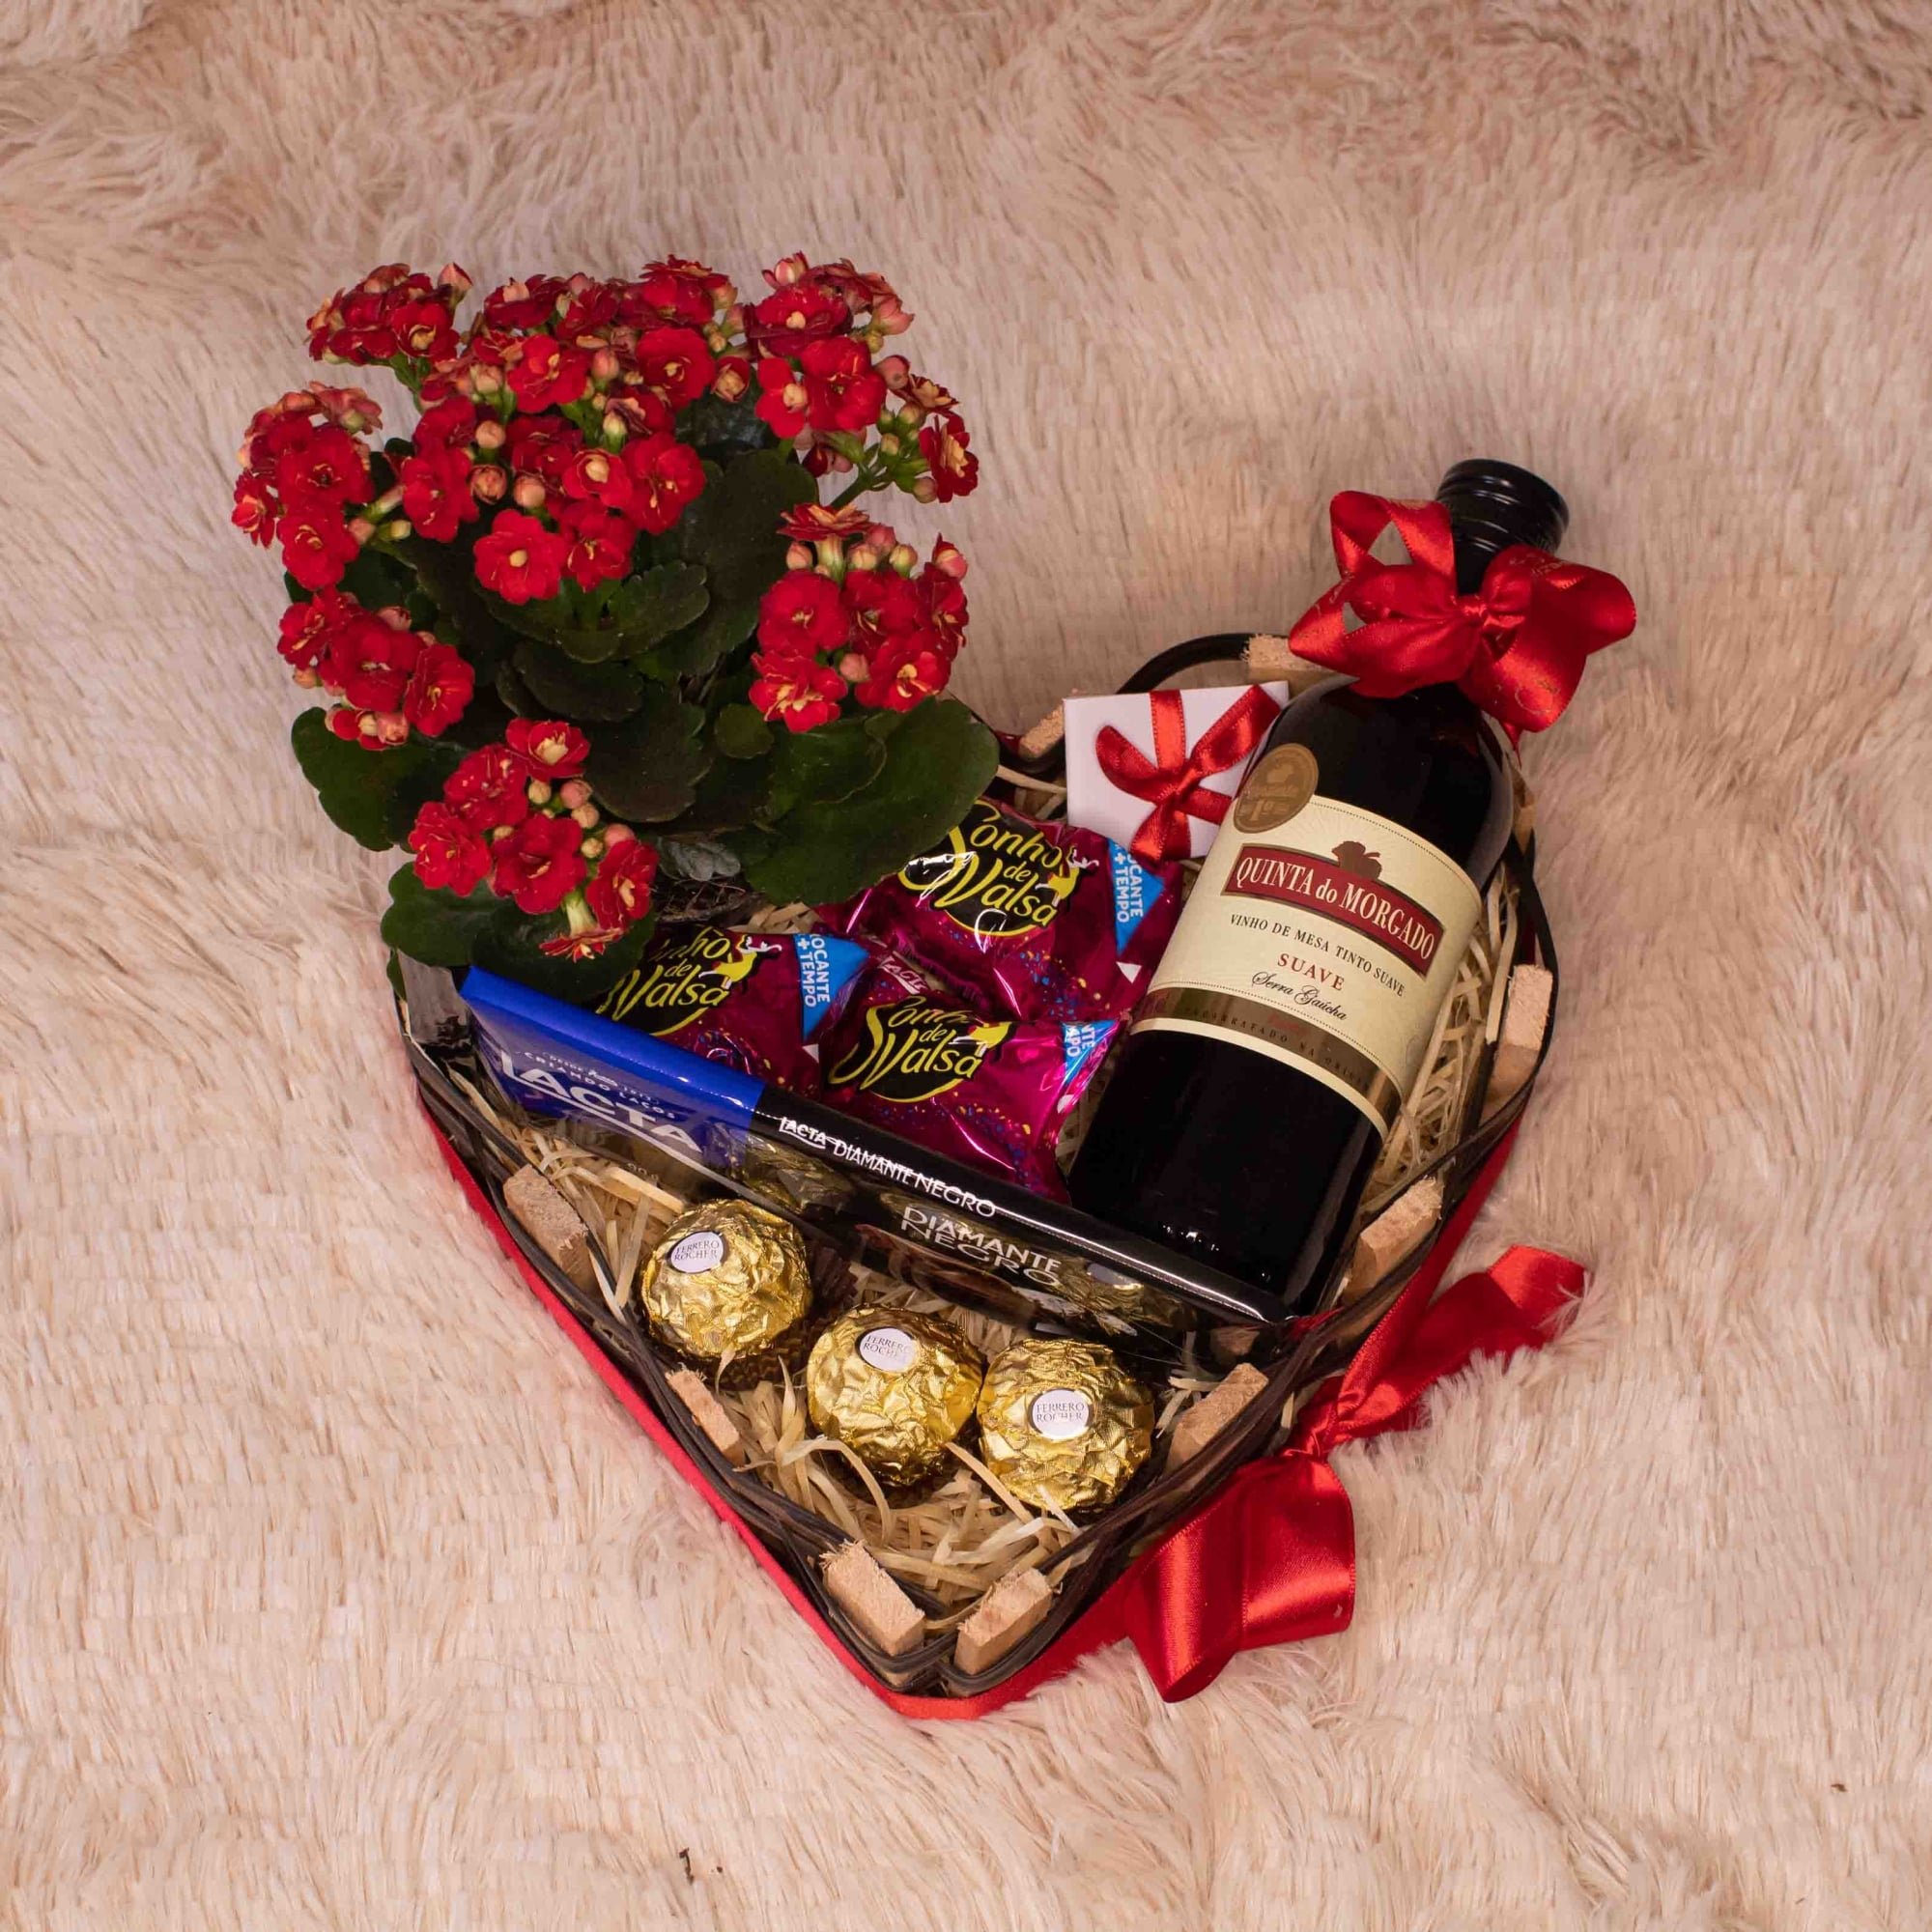 cesta-romantica-com-mini-vinho-ferrero-rocher-e-chocolates-367-1-b146397290baa219c606b3f59064b346-min